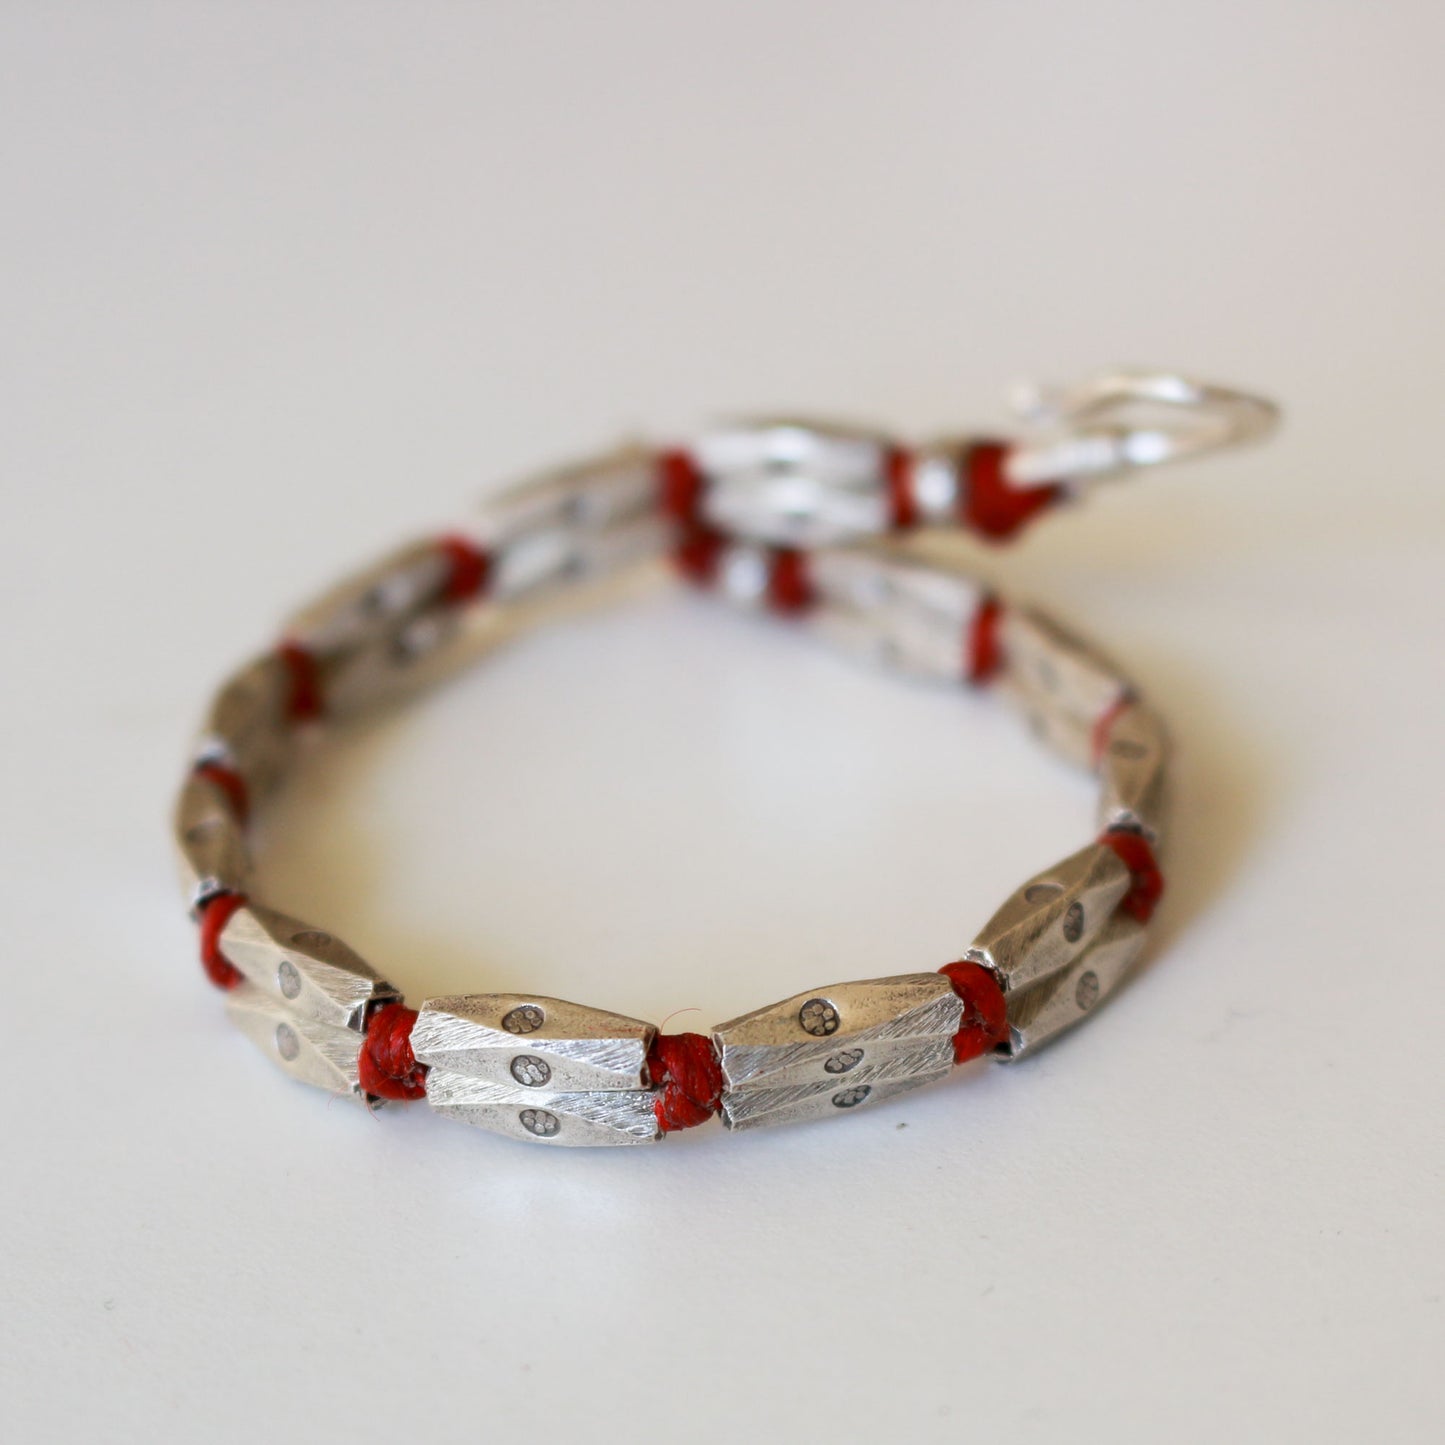 Stamped Sterling Silver knotted bracelet